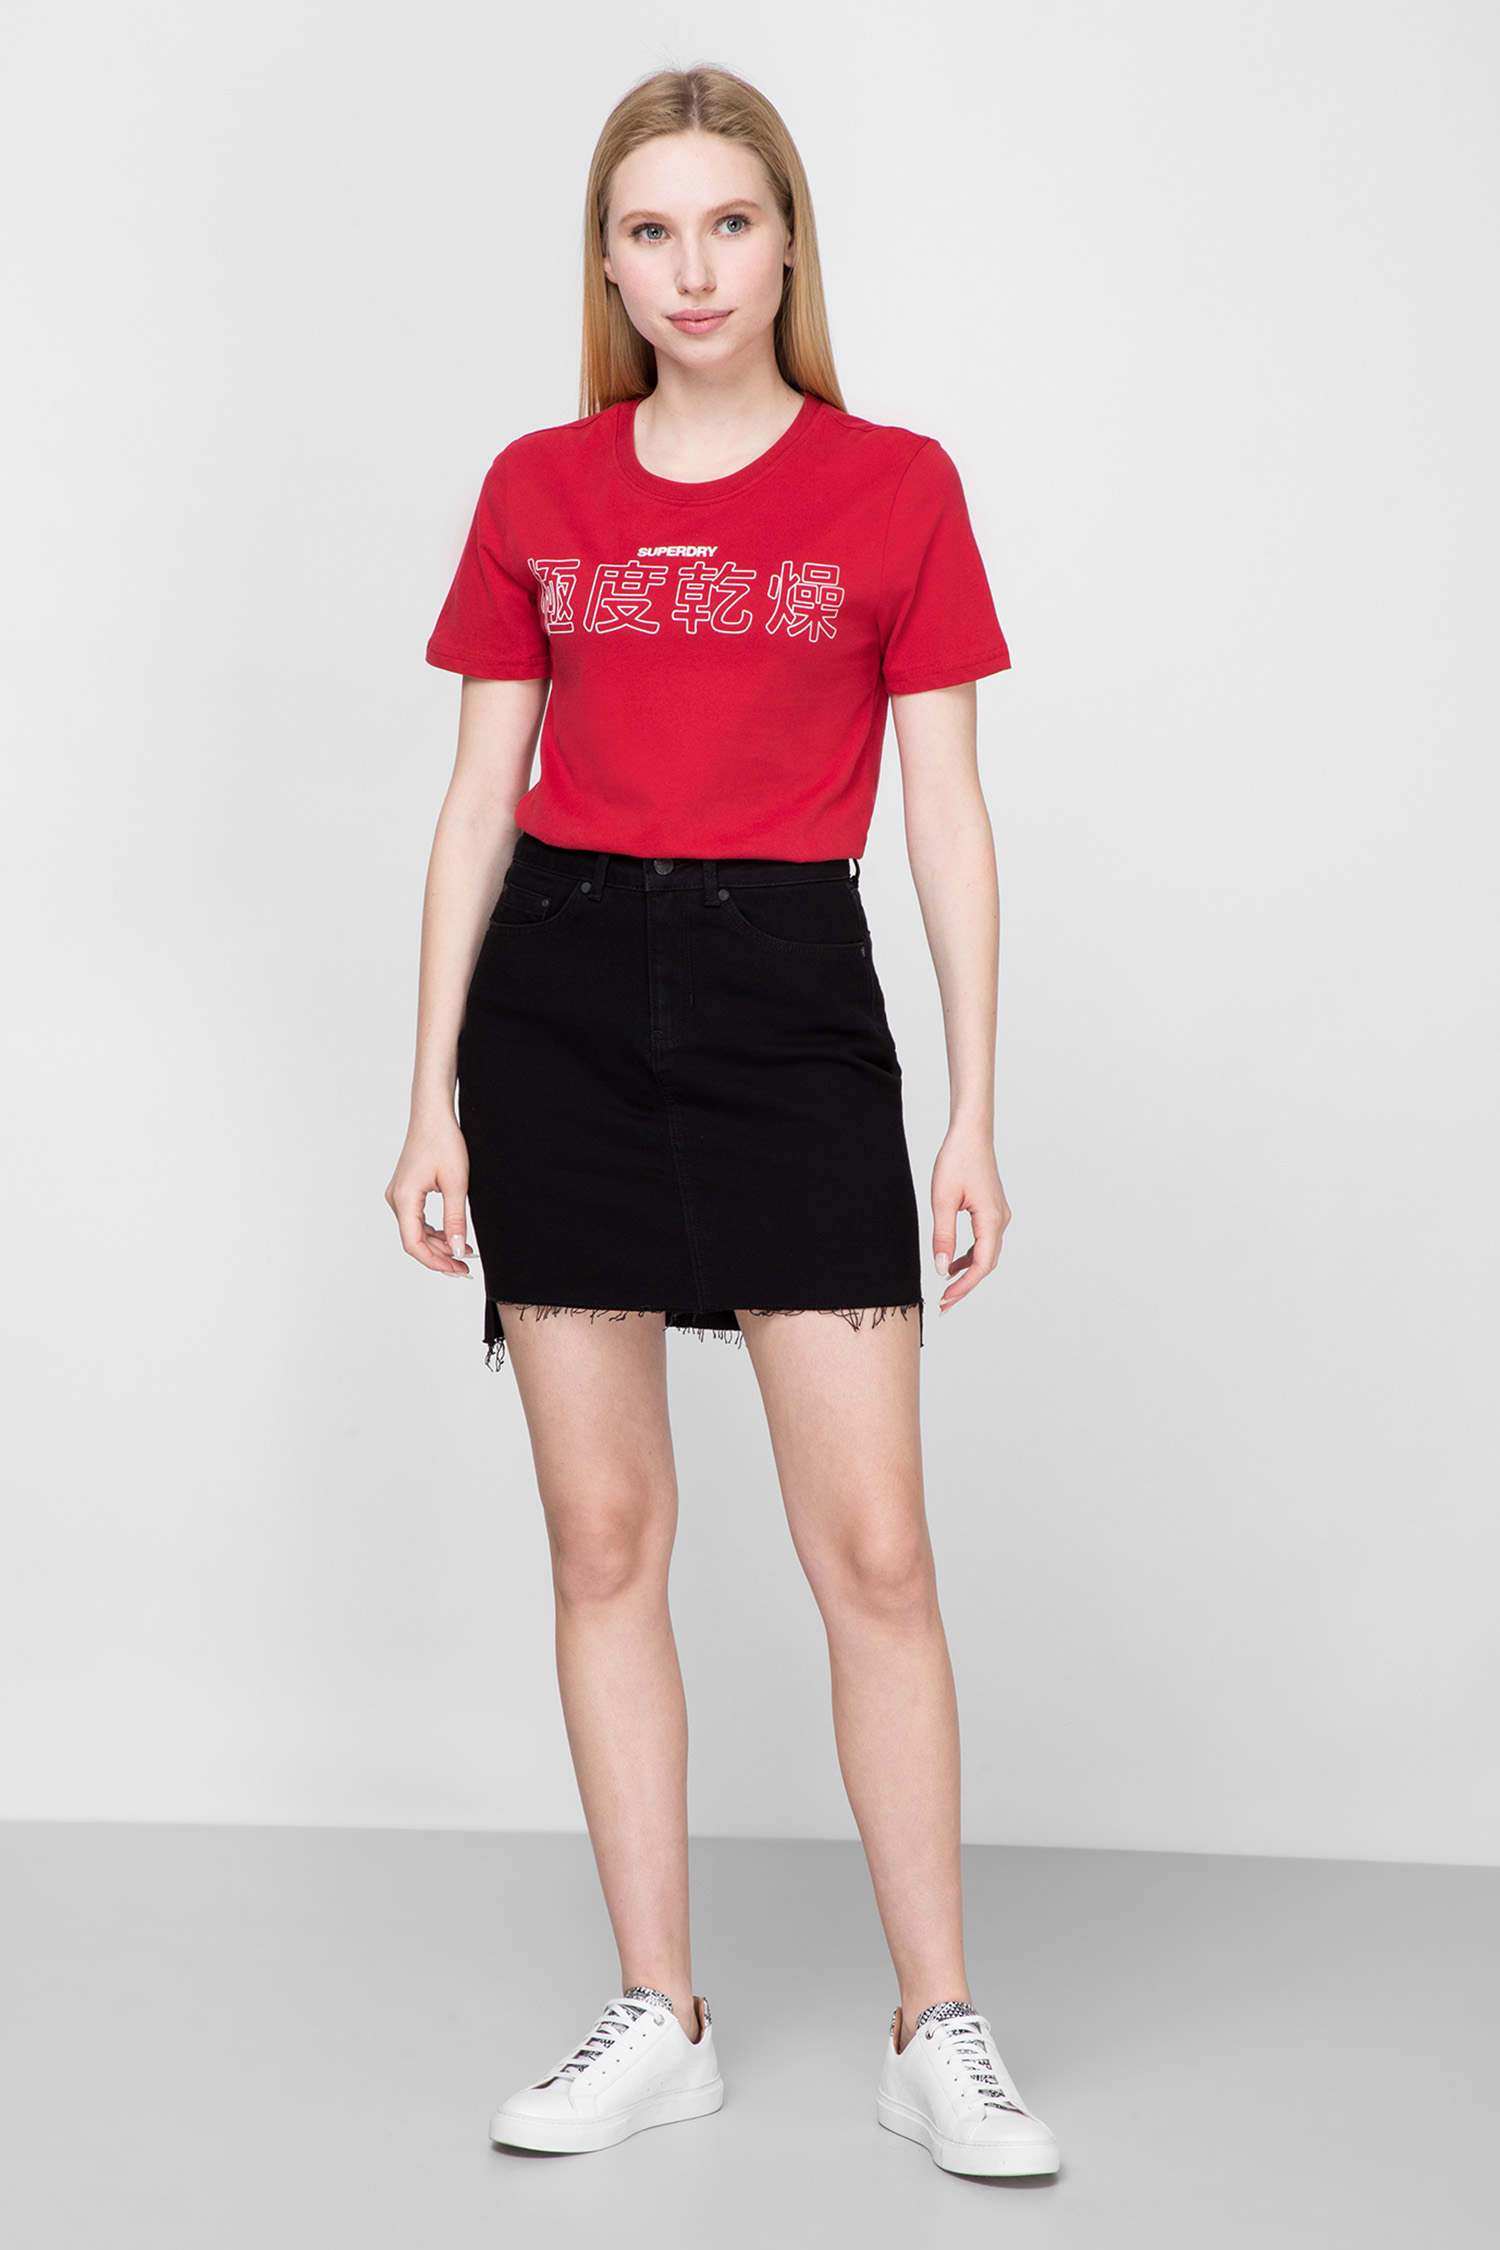 Женская красная футболка SuperDry W1010005A;53J